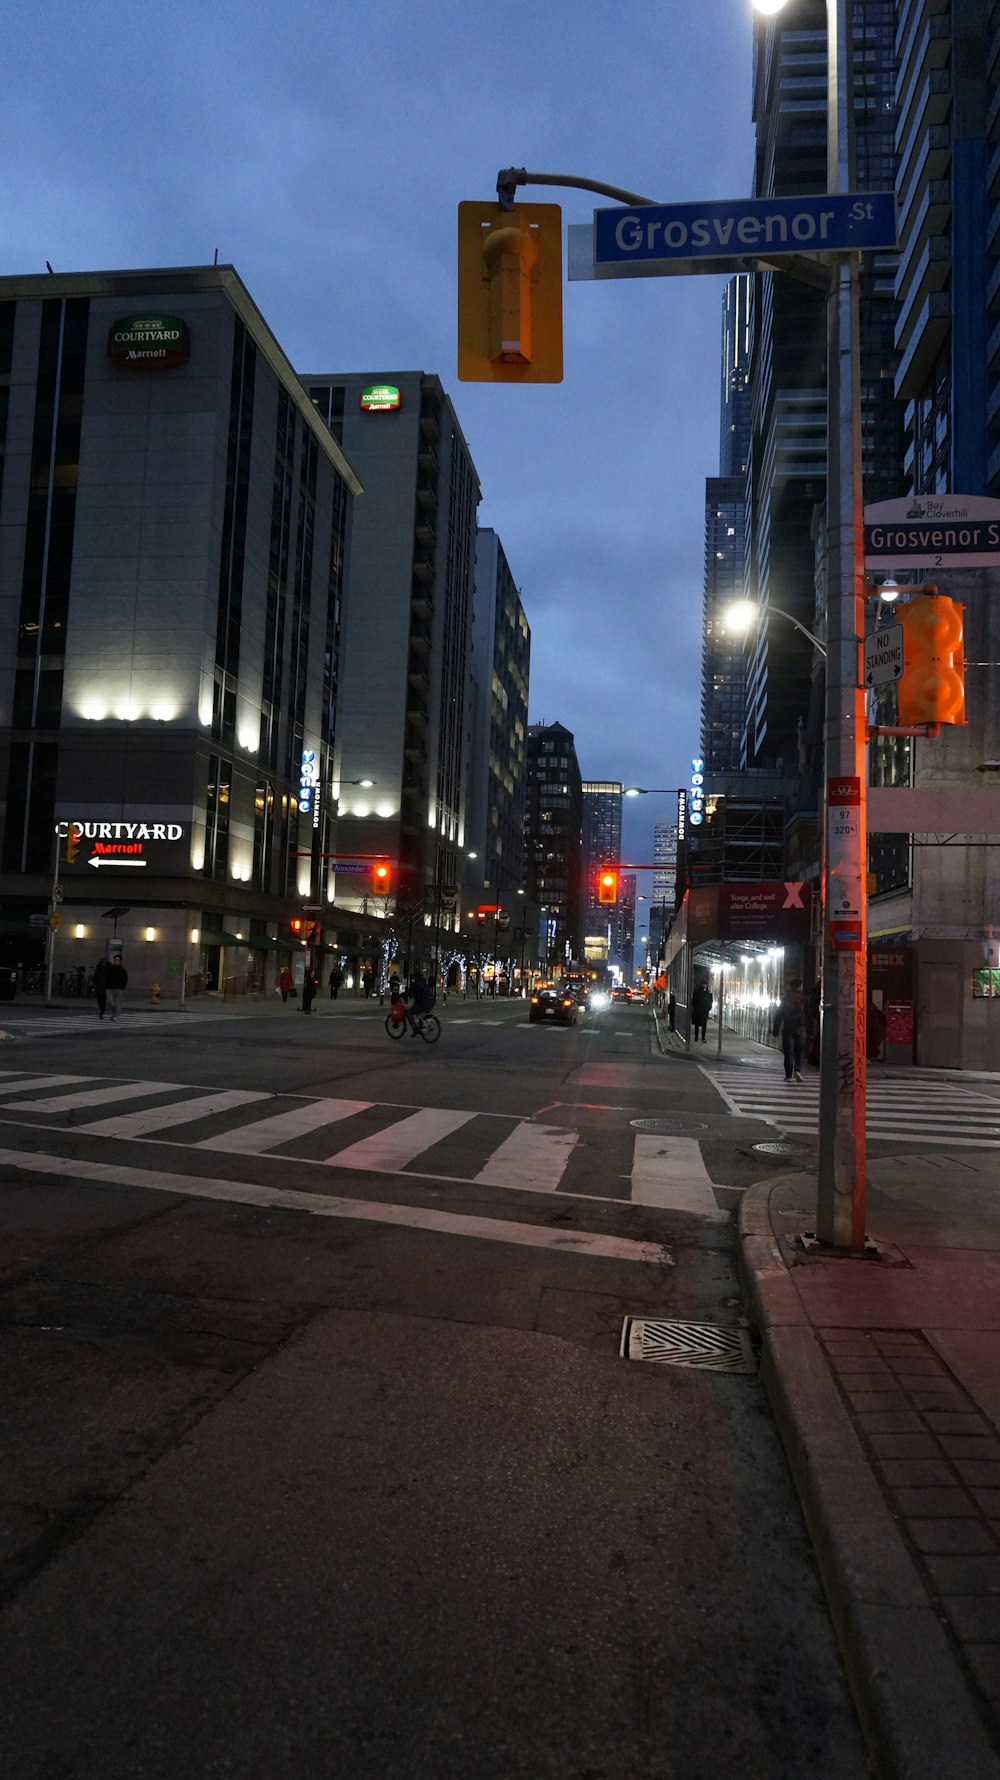 a traffic light on a city street at night